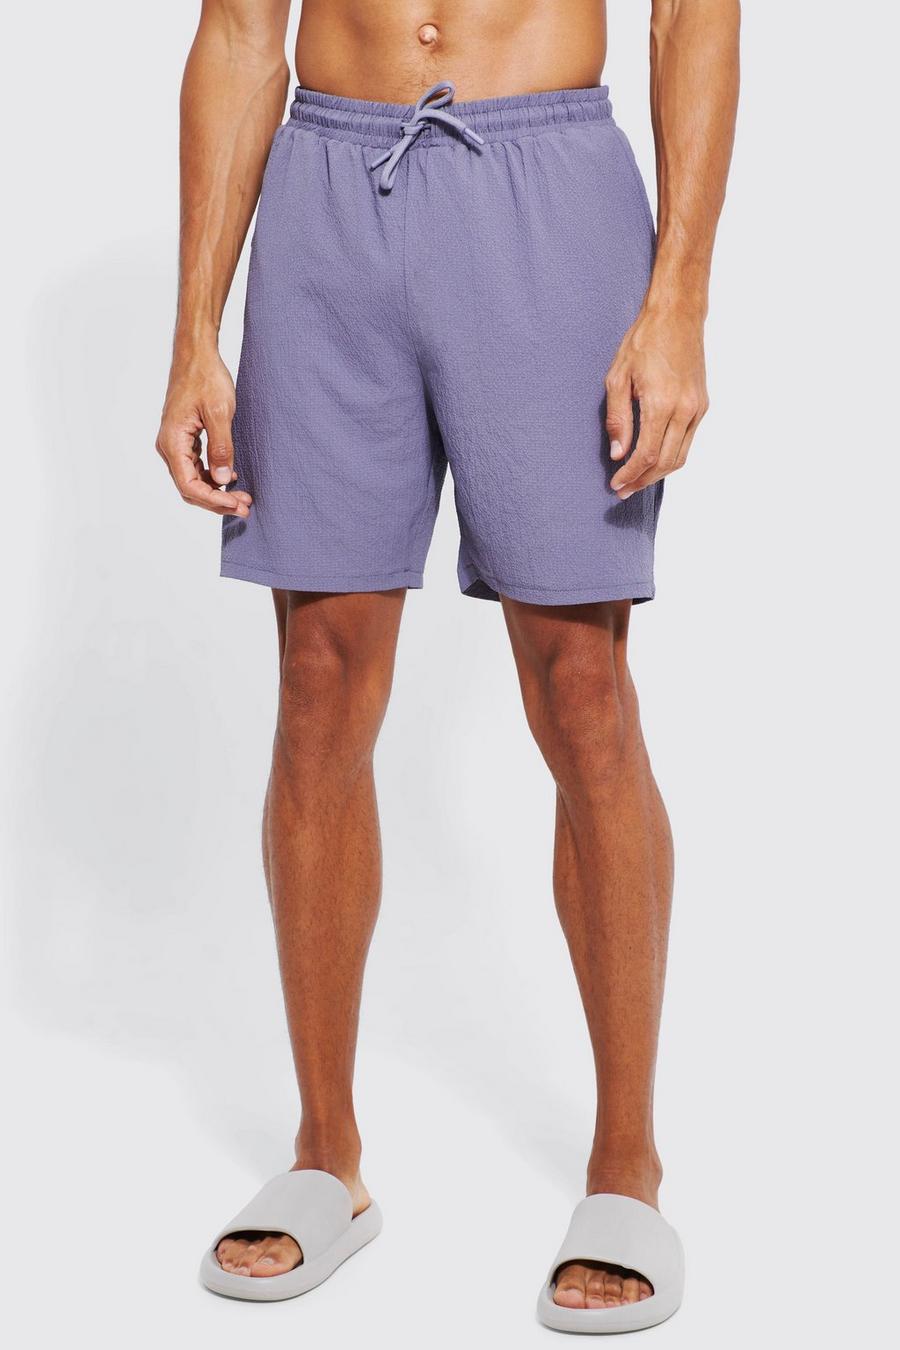 Charcoal grey Tall Mid Length Seersucker Swim Shorts